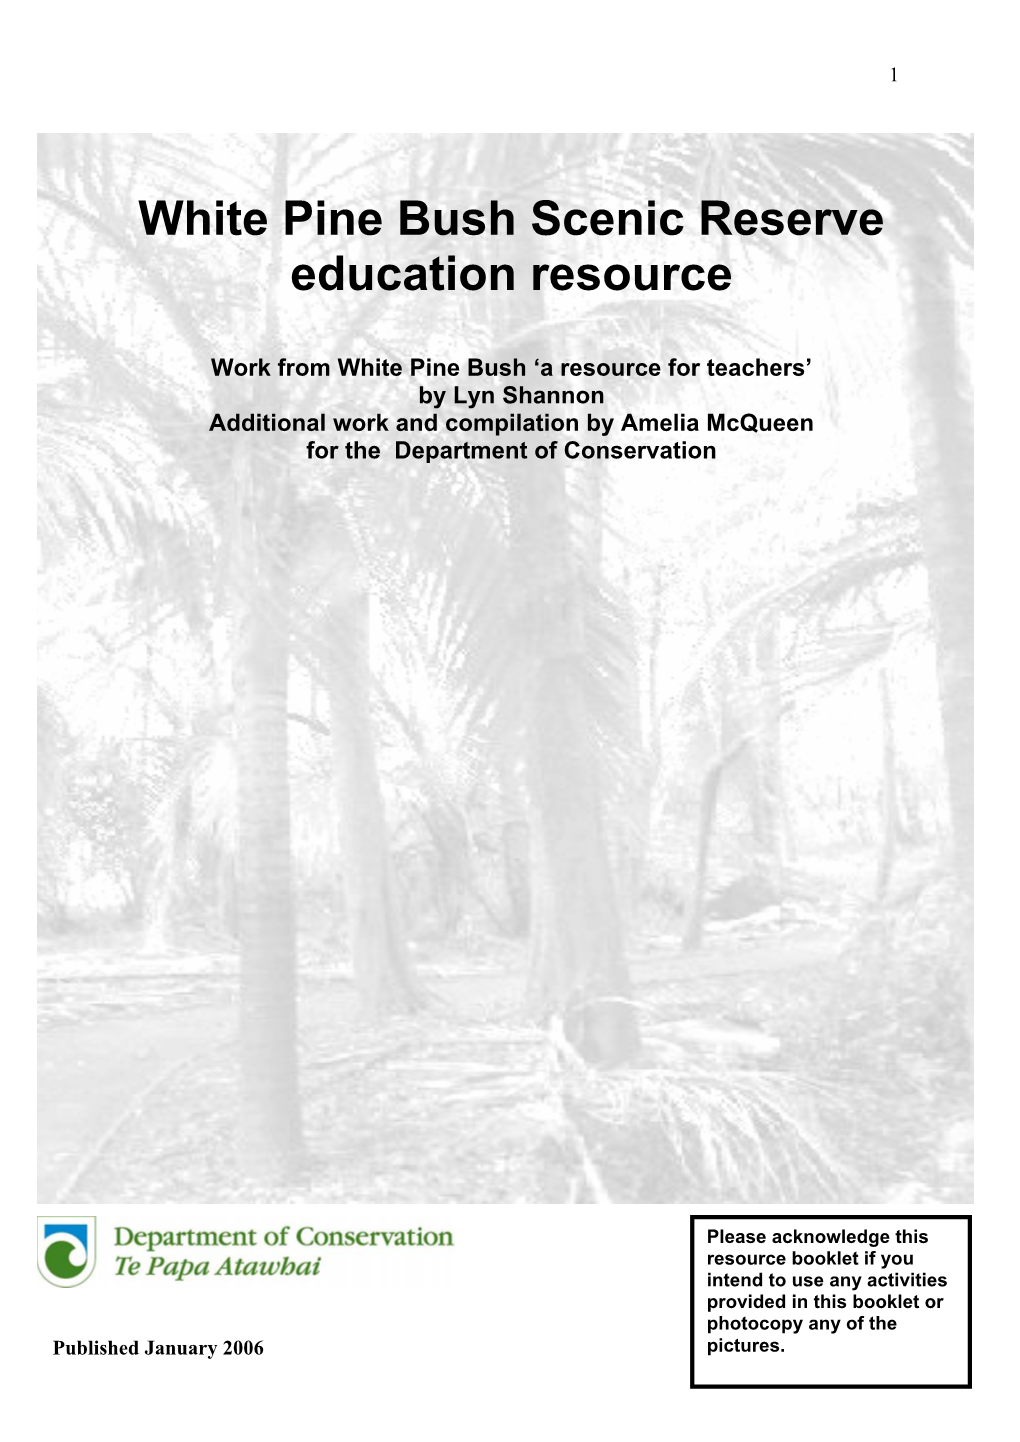 White Pine Bush Scenic Reserve Education Resource